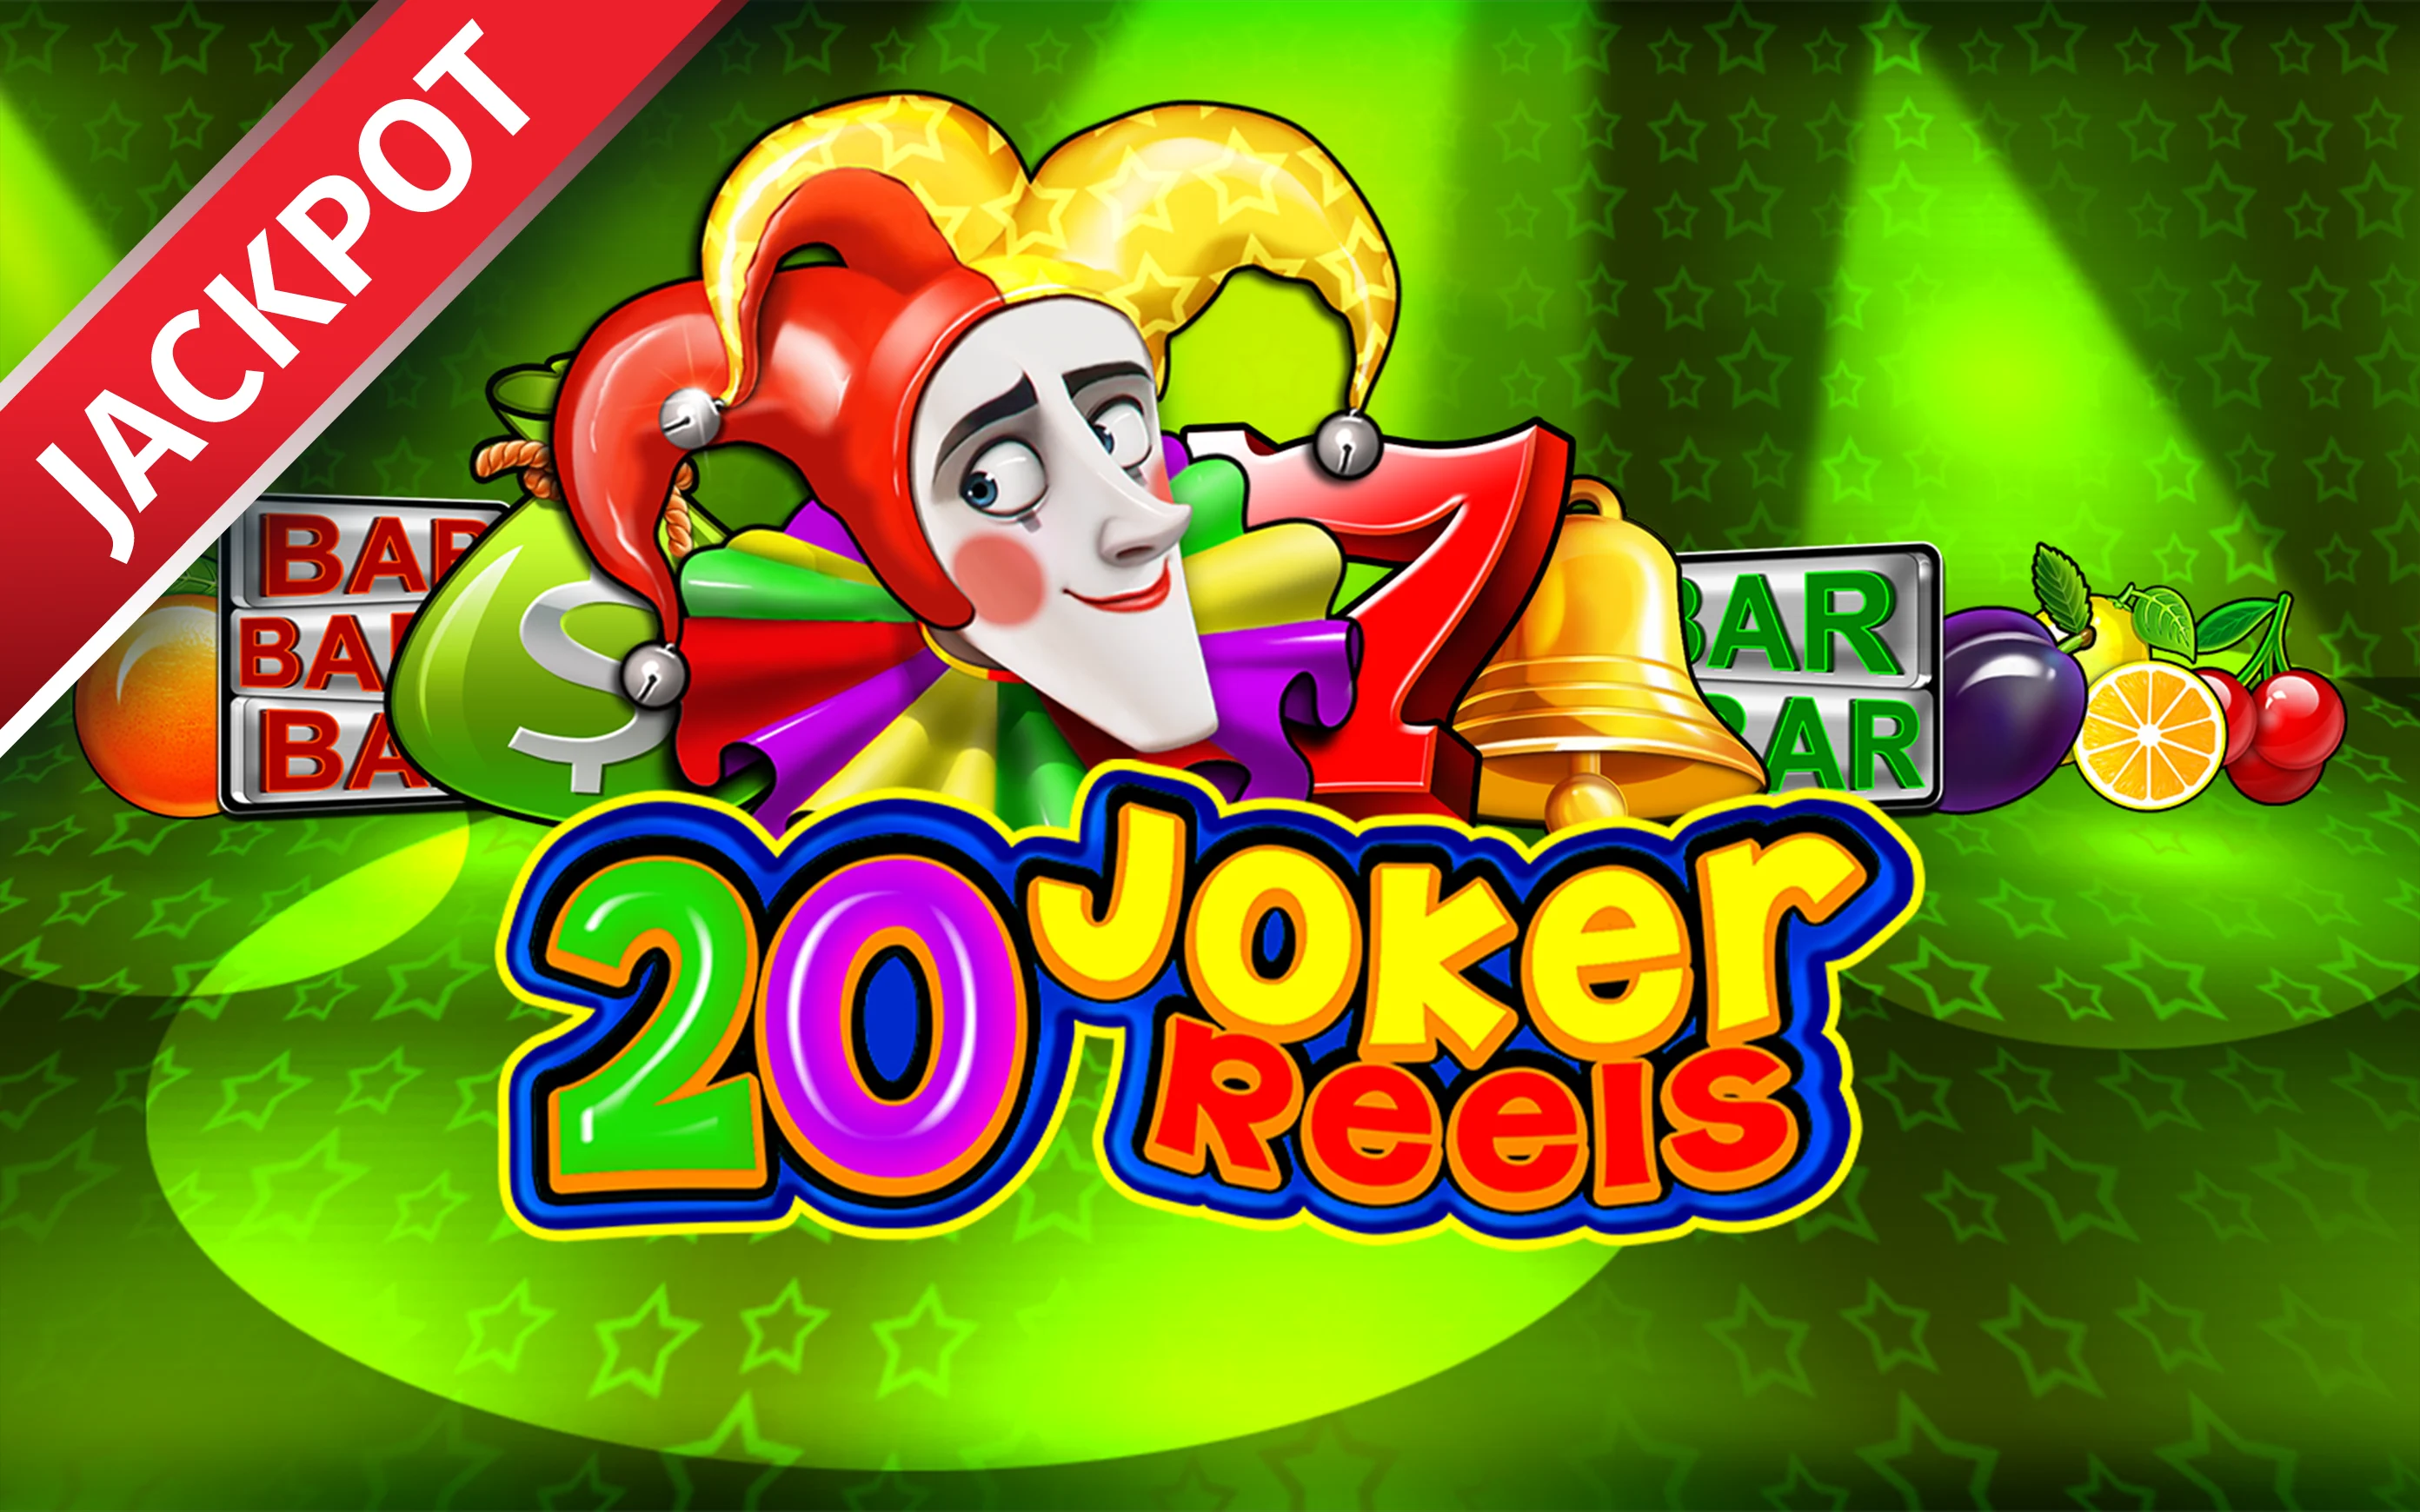 Gioca a 20 Joker Reels sul casino online Starcasino.be